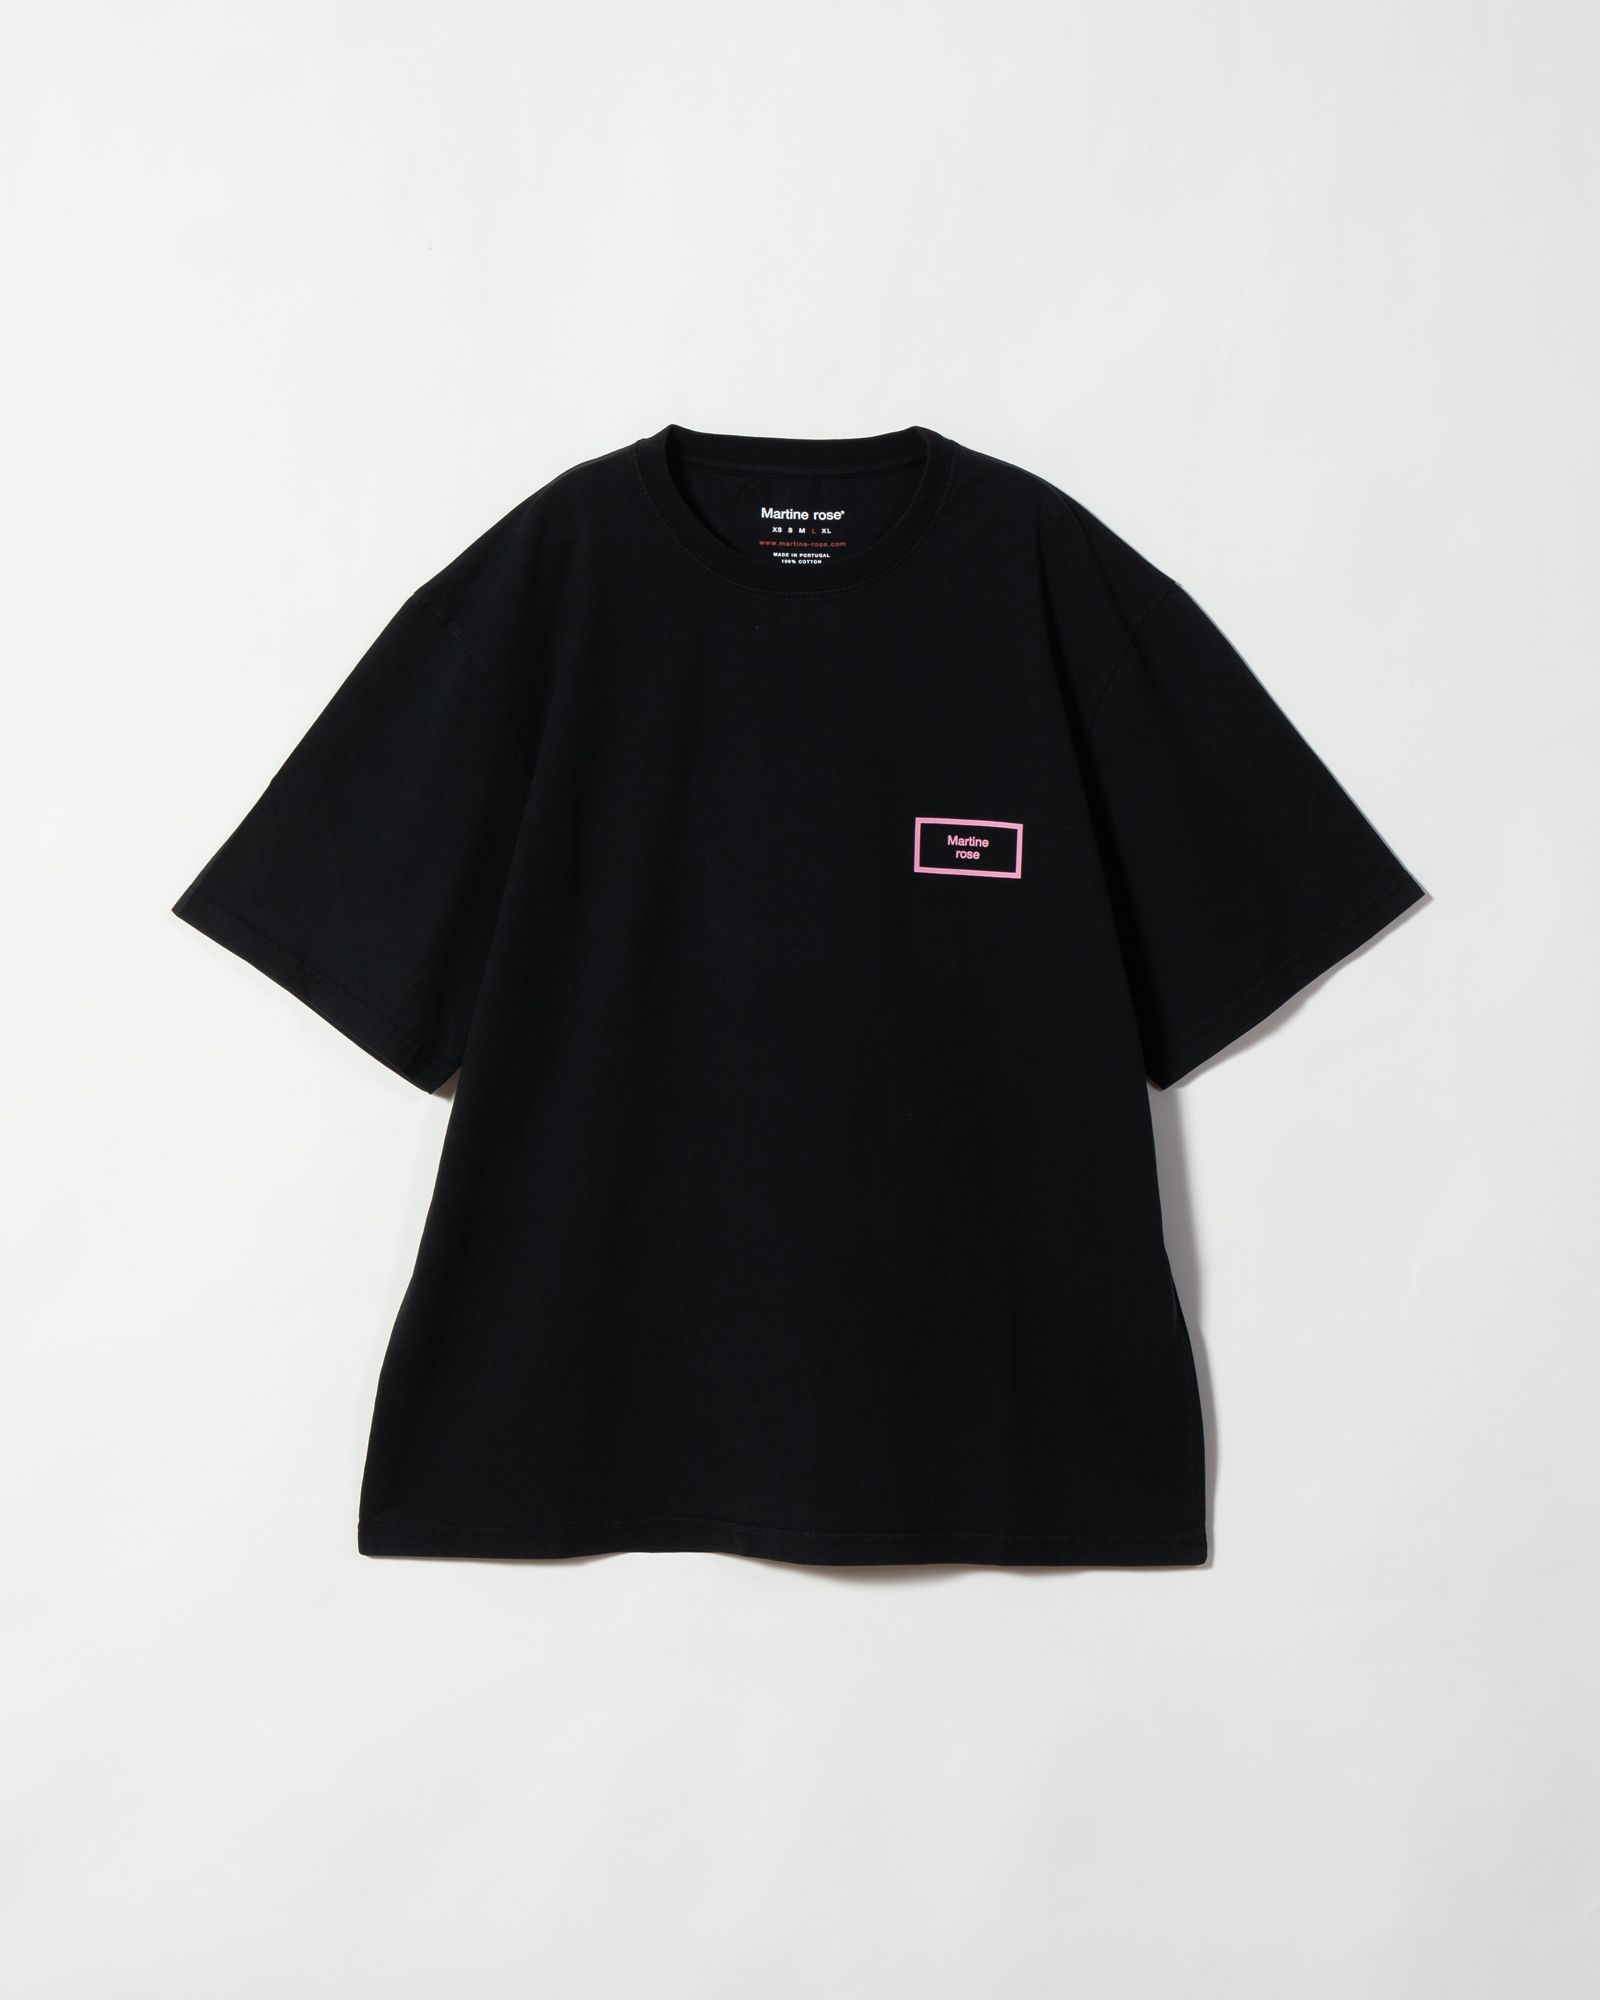 MARTINE ROSE - Classic T-Shirt Black | ALTERFATE